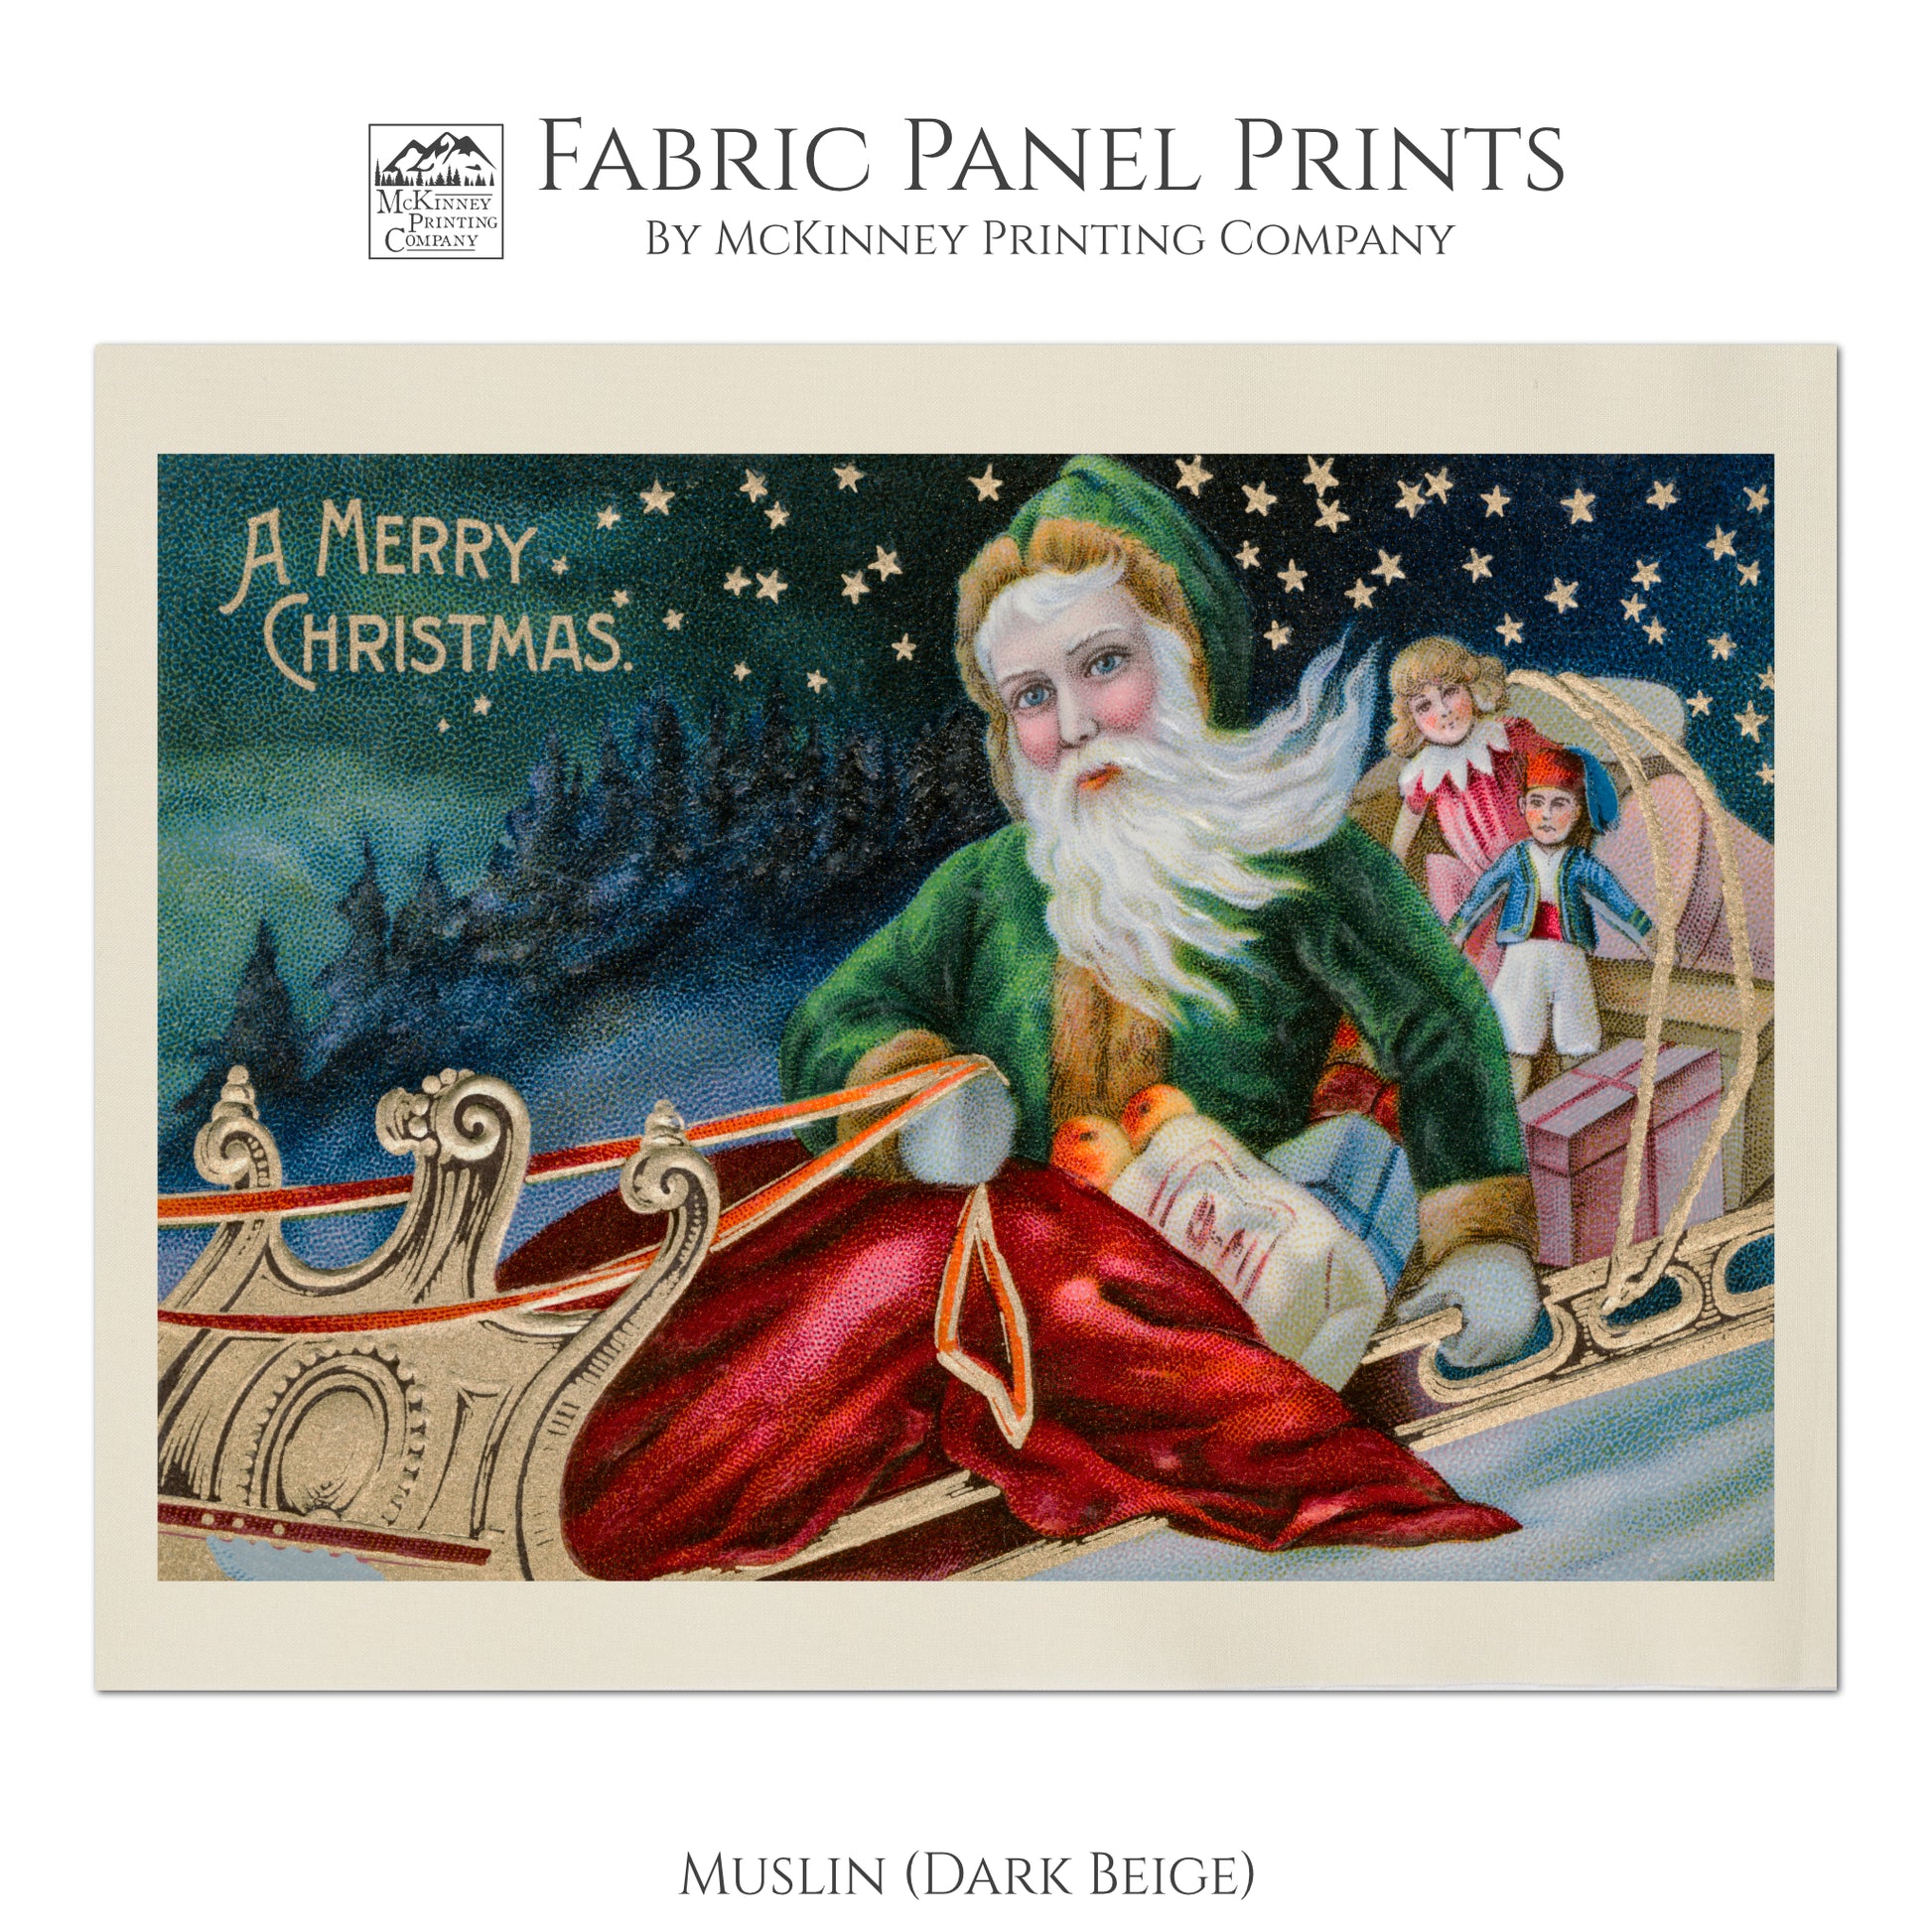 Victorian Santa, Vintage, Christmas Fabric Panel, Victorian Decor, Antique, Vintage, Fabric Panel Print - Muslin